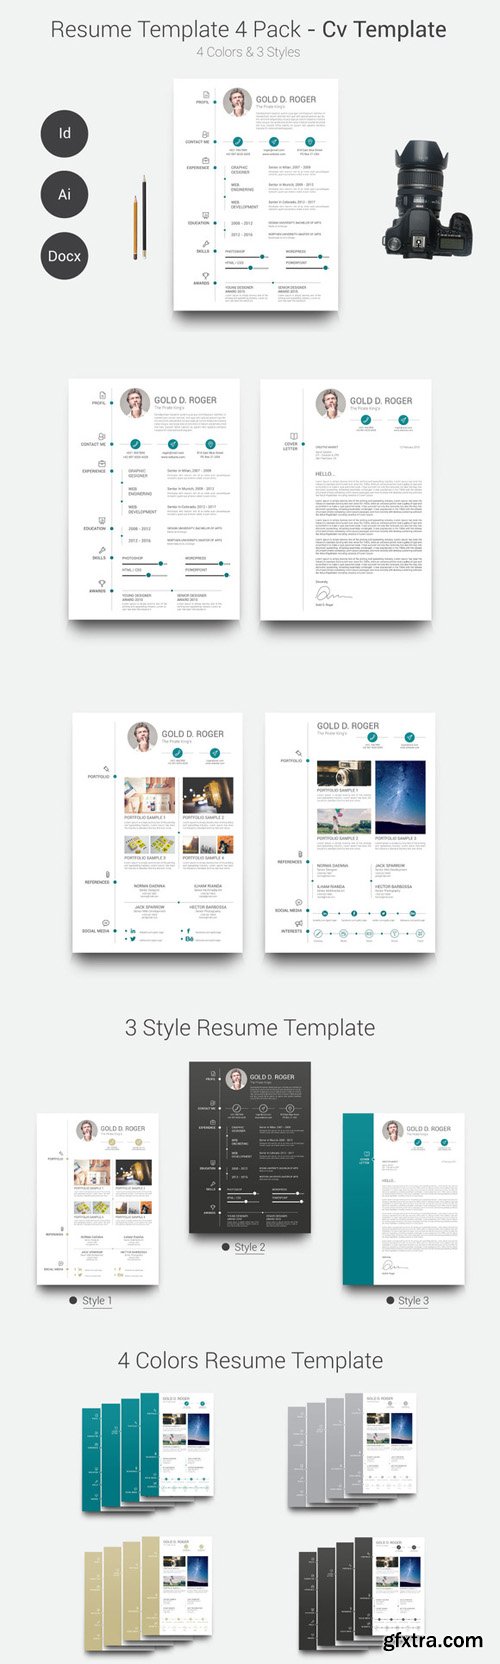 Resume/CV Template 4 Pack